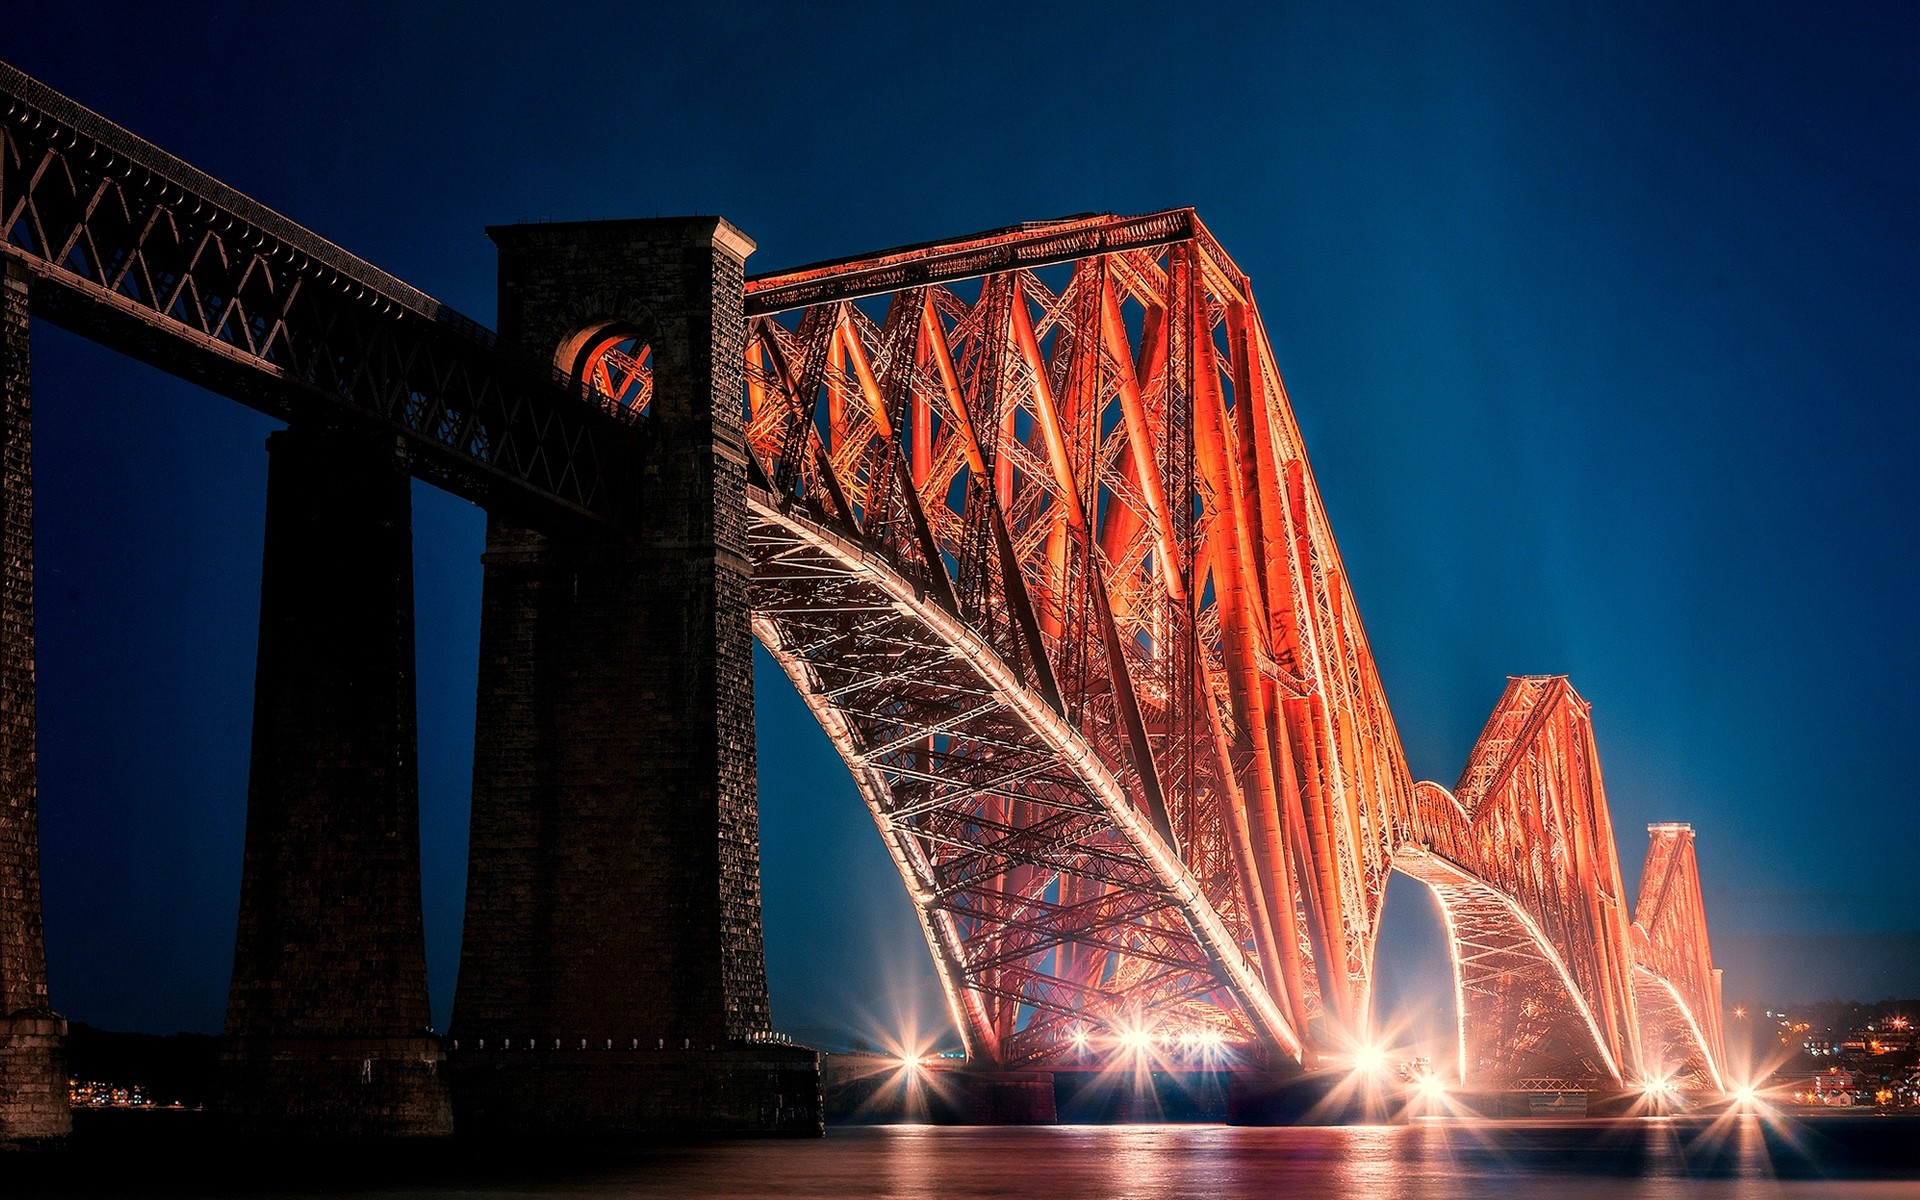 The Forth Bridge Edinburgh, HD World, 4k Wallpaper, Image, Background, Photo and Picture